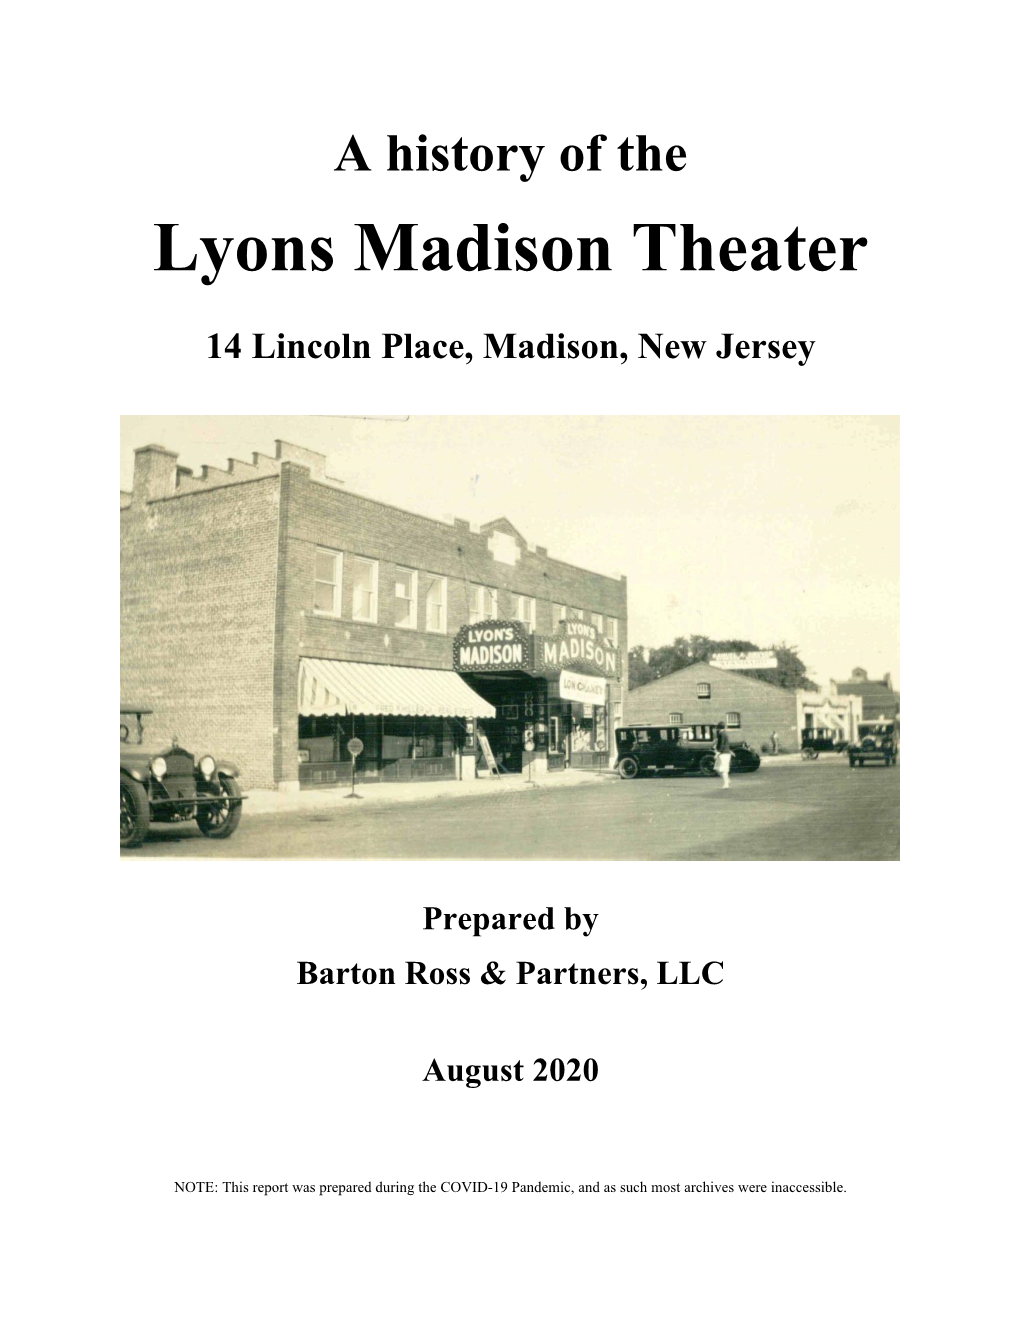 History of the Lyon's Madison Theatre